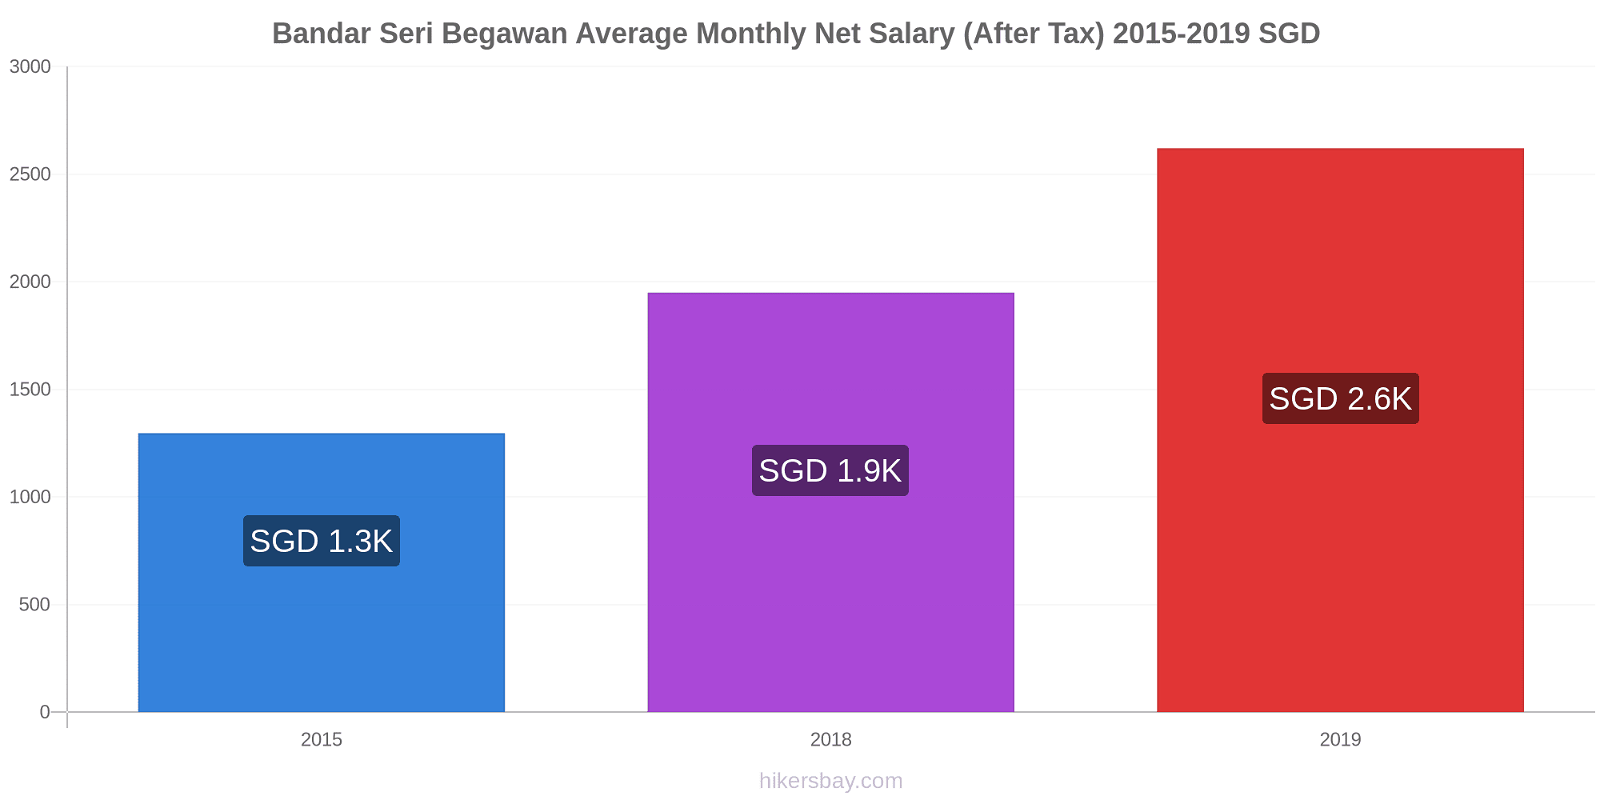 Bandar Seri Begawan price changes Average Monthly Net Salary (After Tax) hikersbay.com